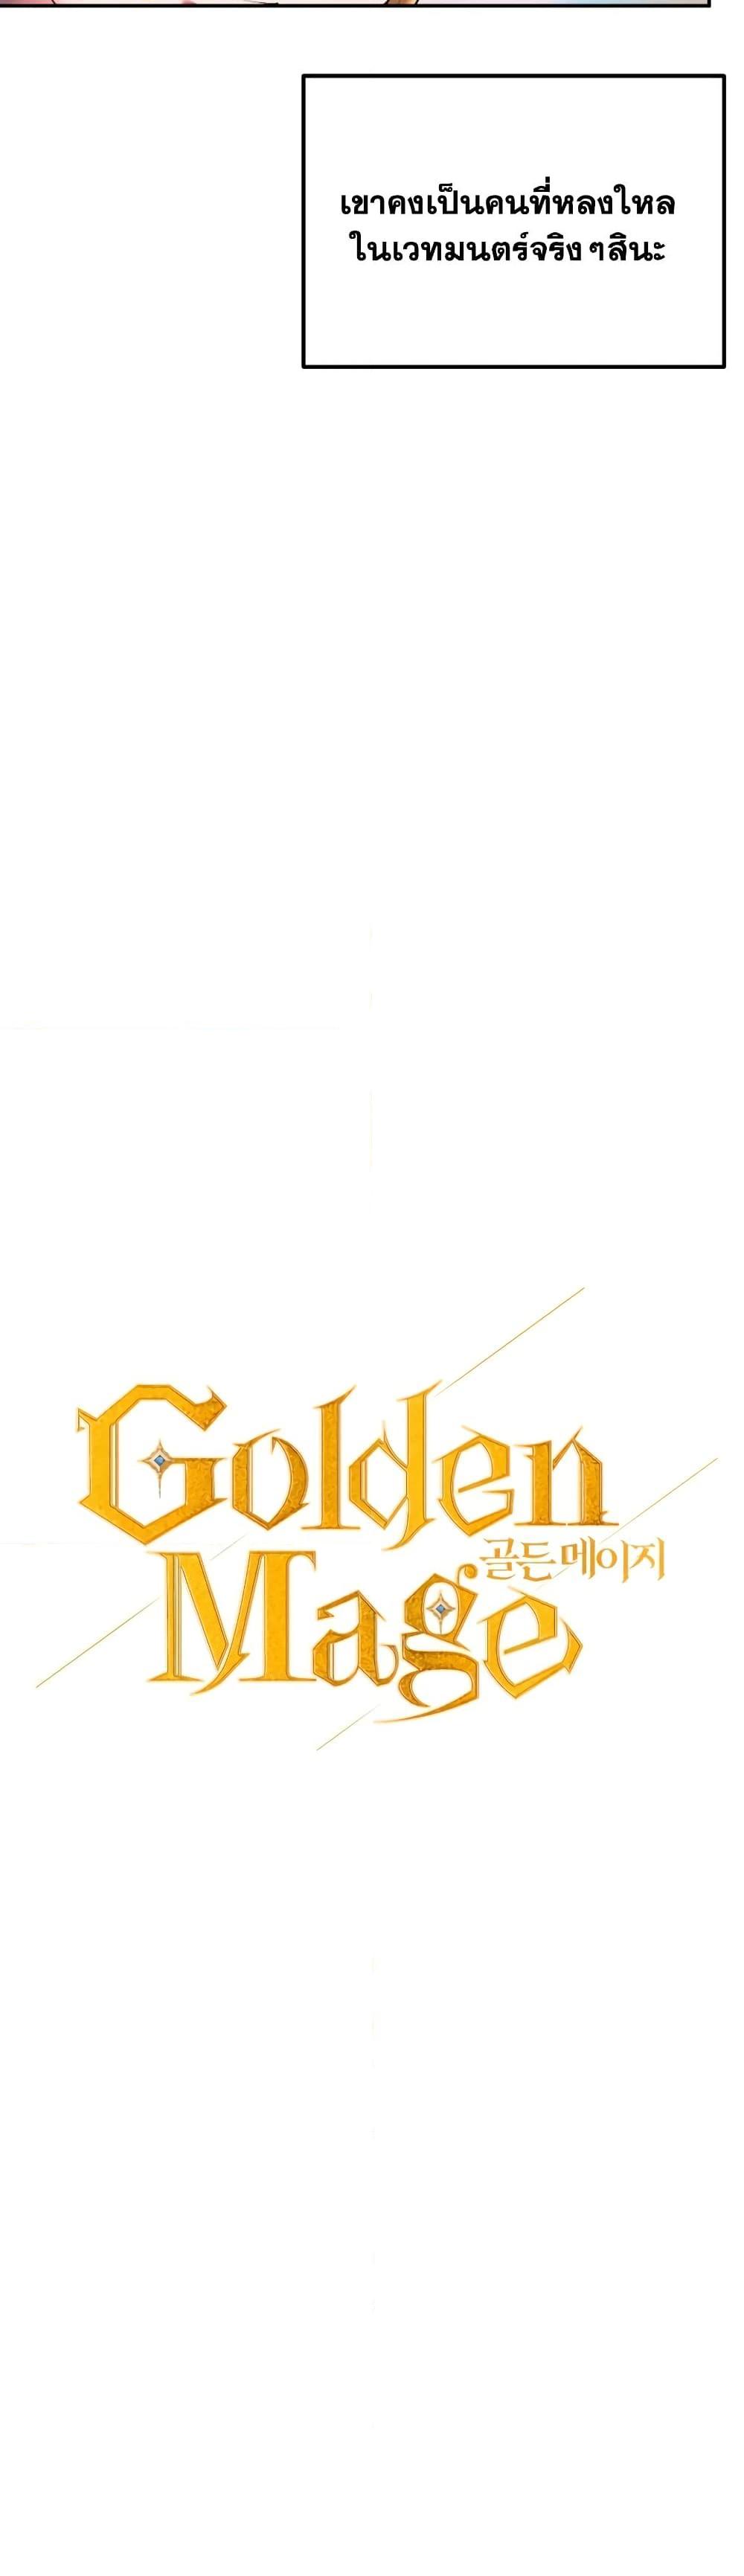 Golden Mage 21 07